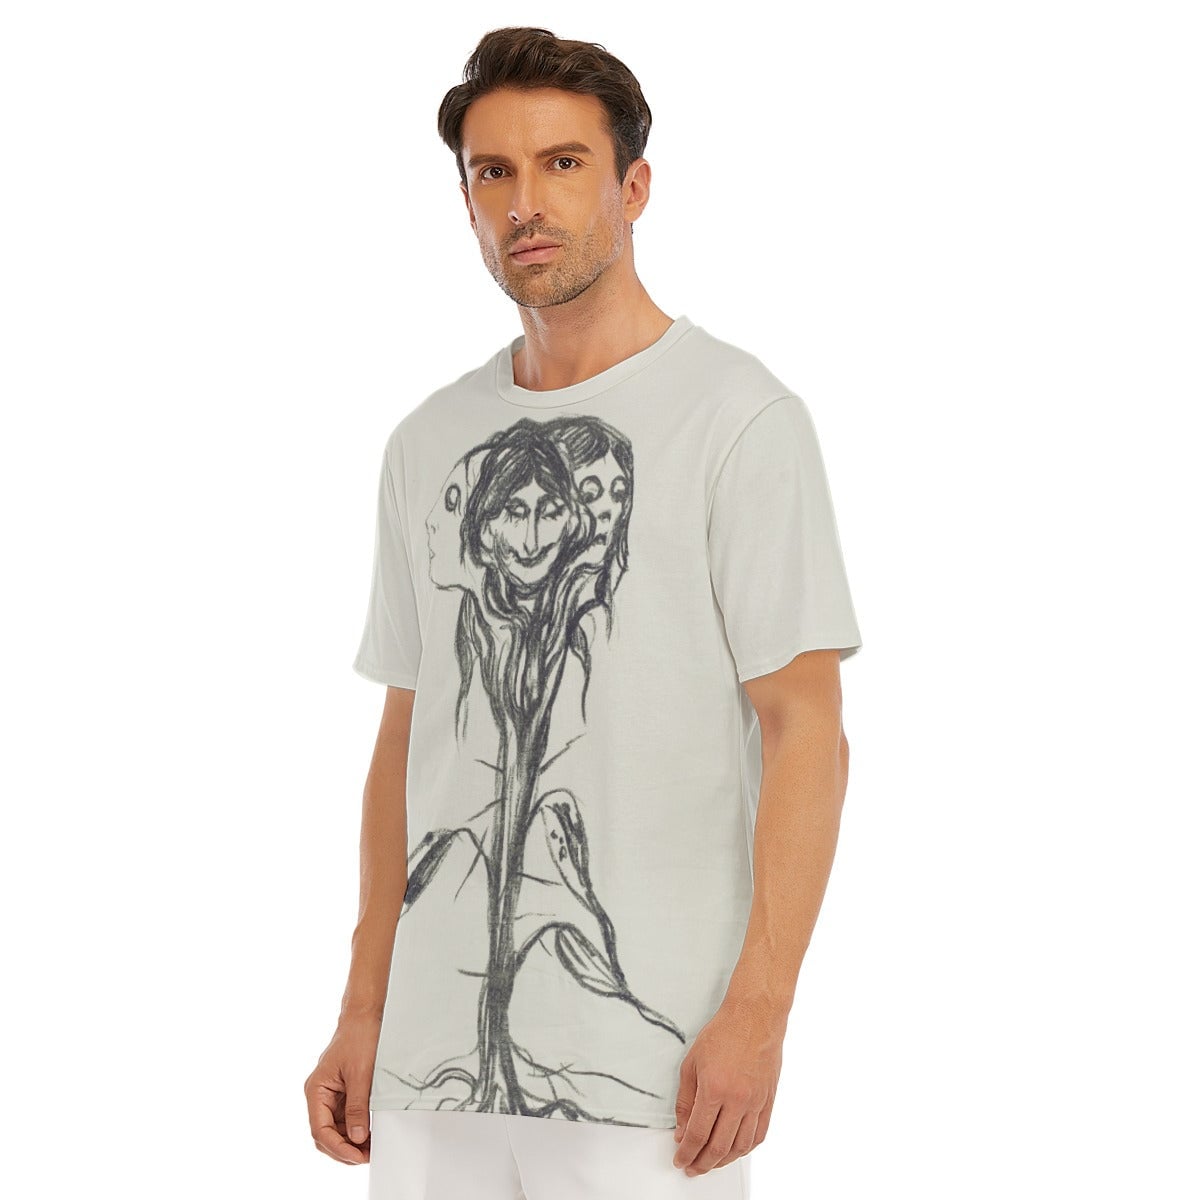 Vignette Amaryllis by Edvard Munch T-Shirt